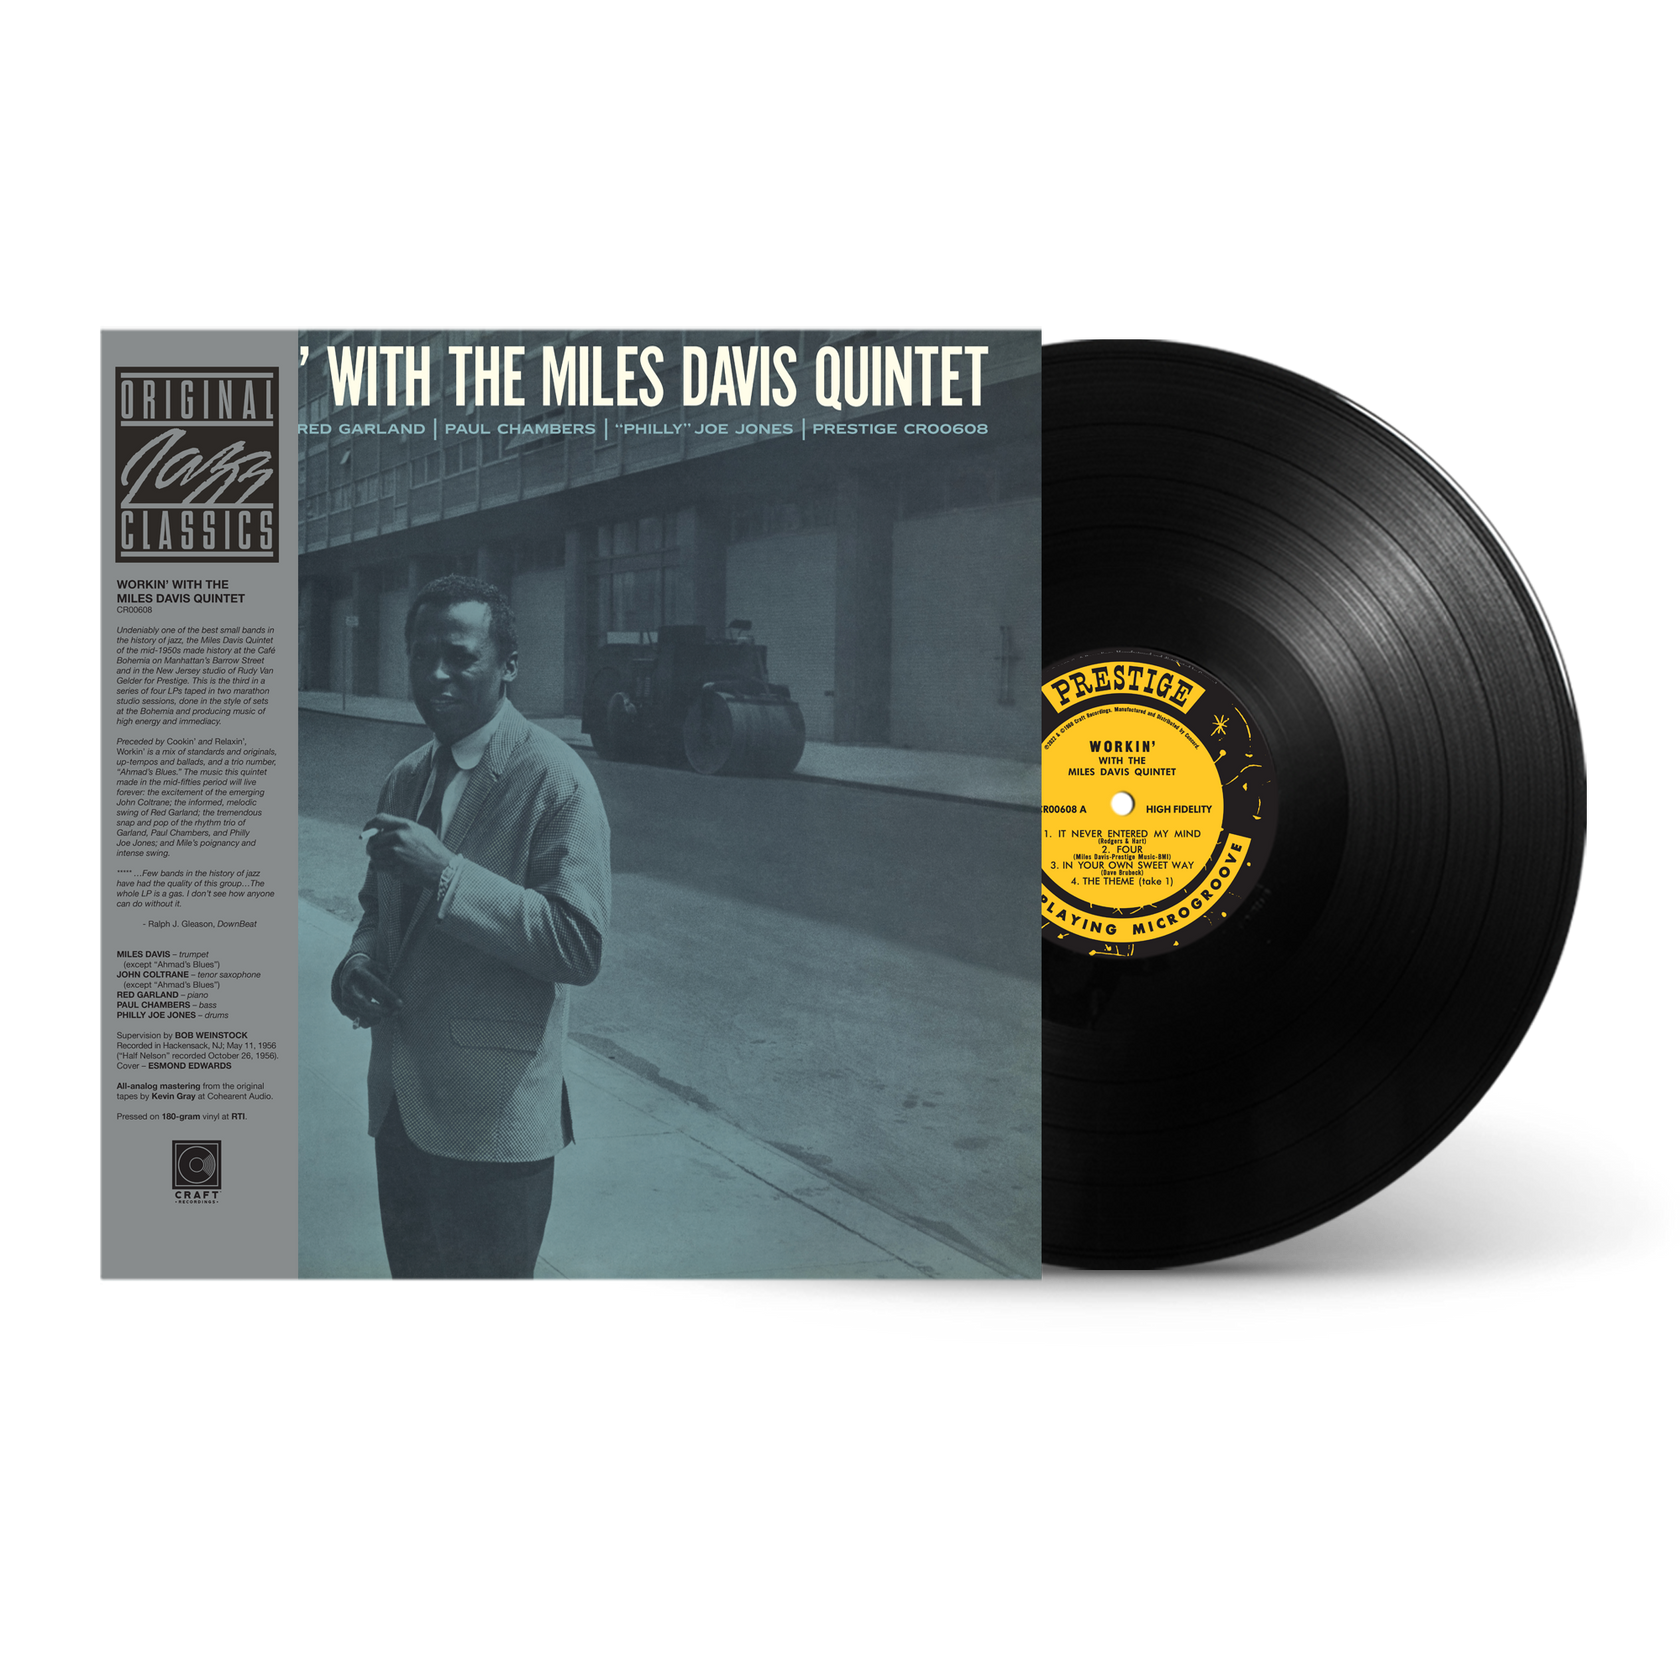 MILES DAVIS QUINTET 'WORKIN' WITH THE MILES DAVIS QUINTET (ORIGINAL JAZZ CLASSICS SERIES)' LP